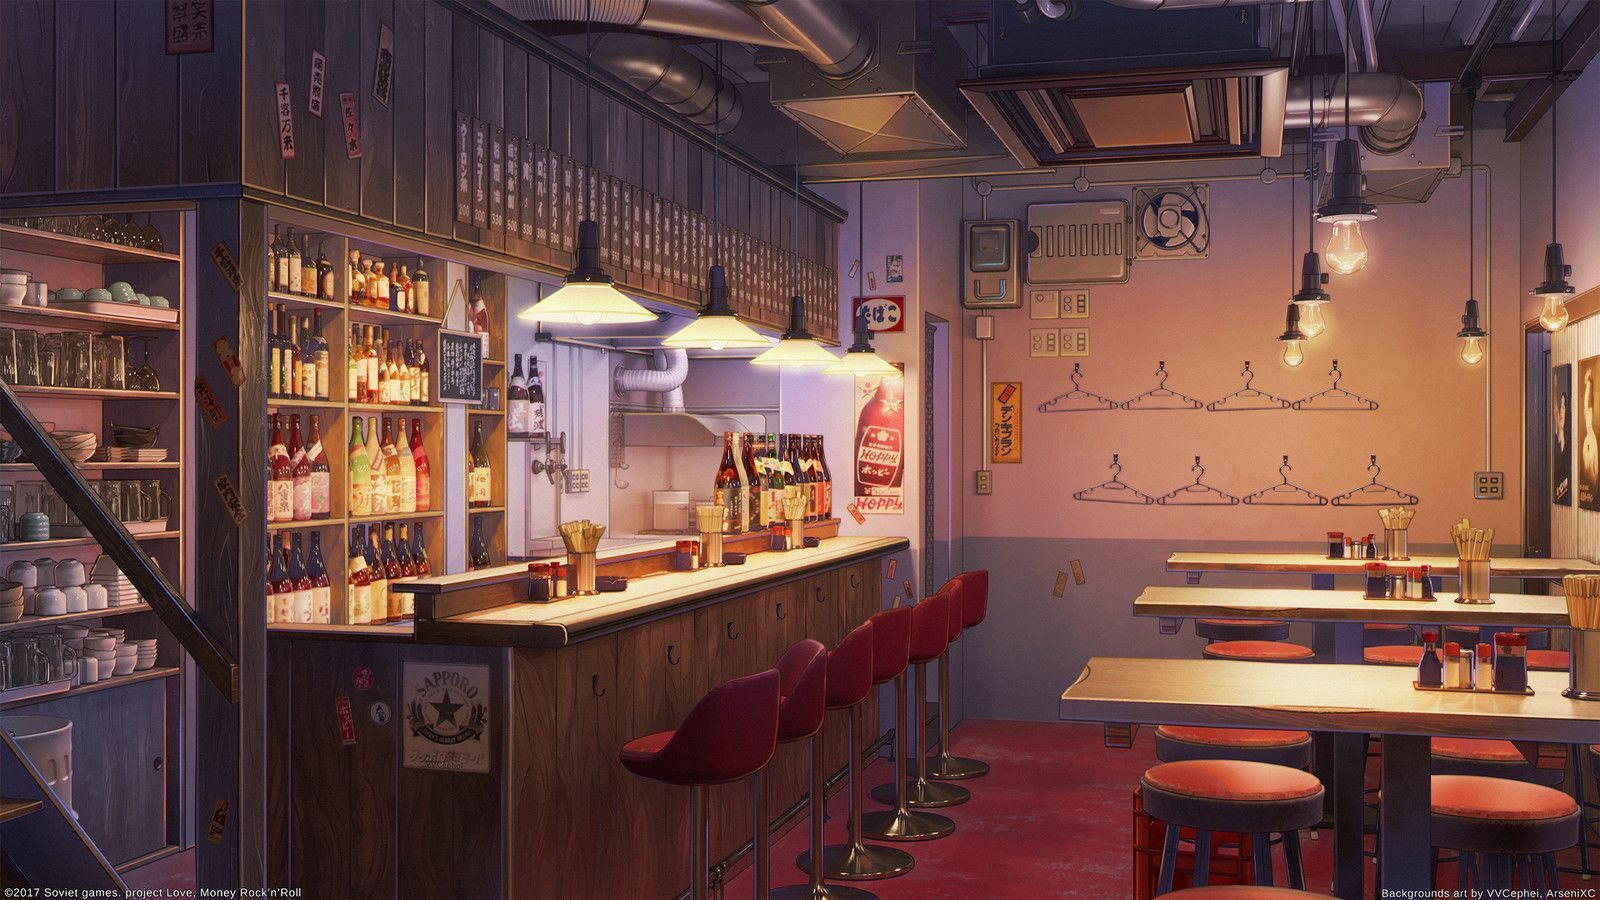 Anime ref. Old bar, Anime background wallpaper, Anime background